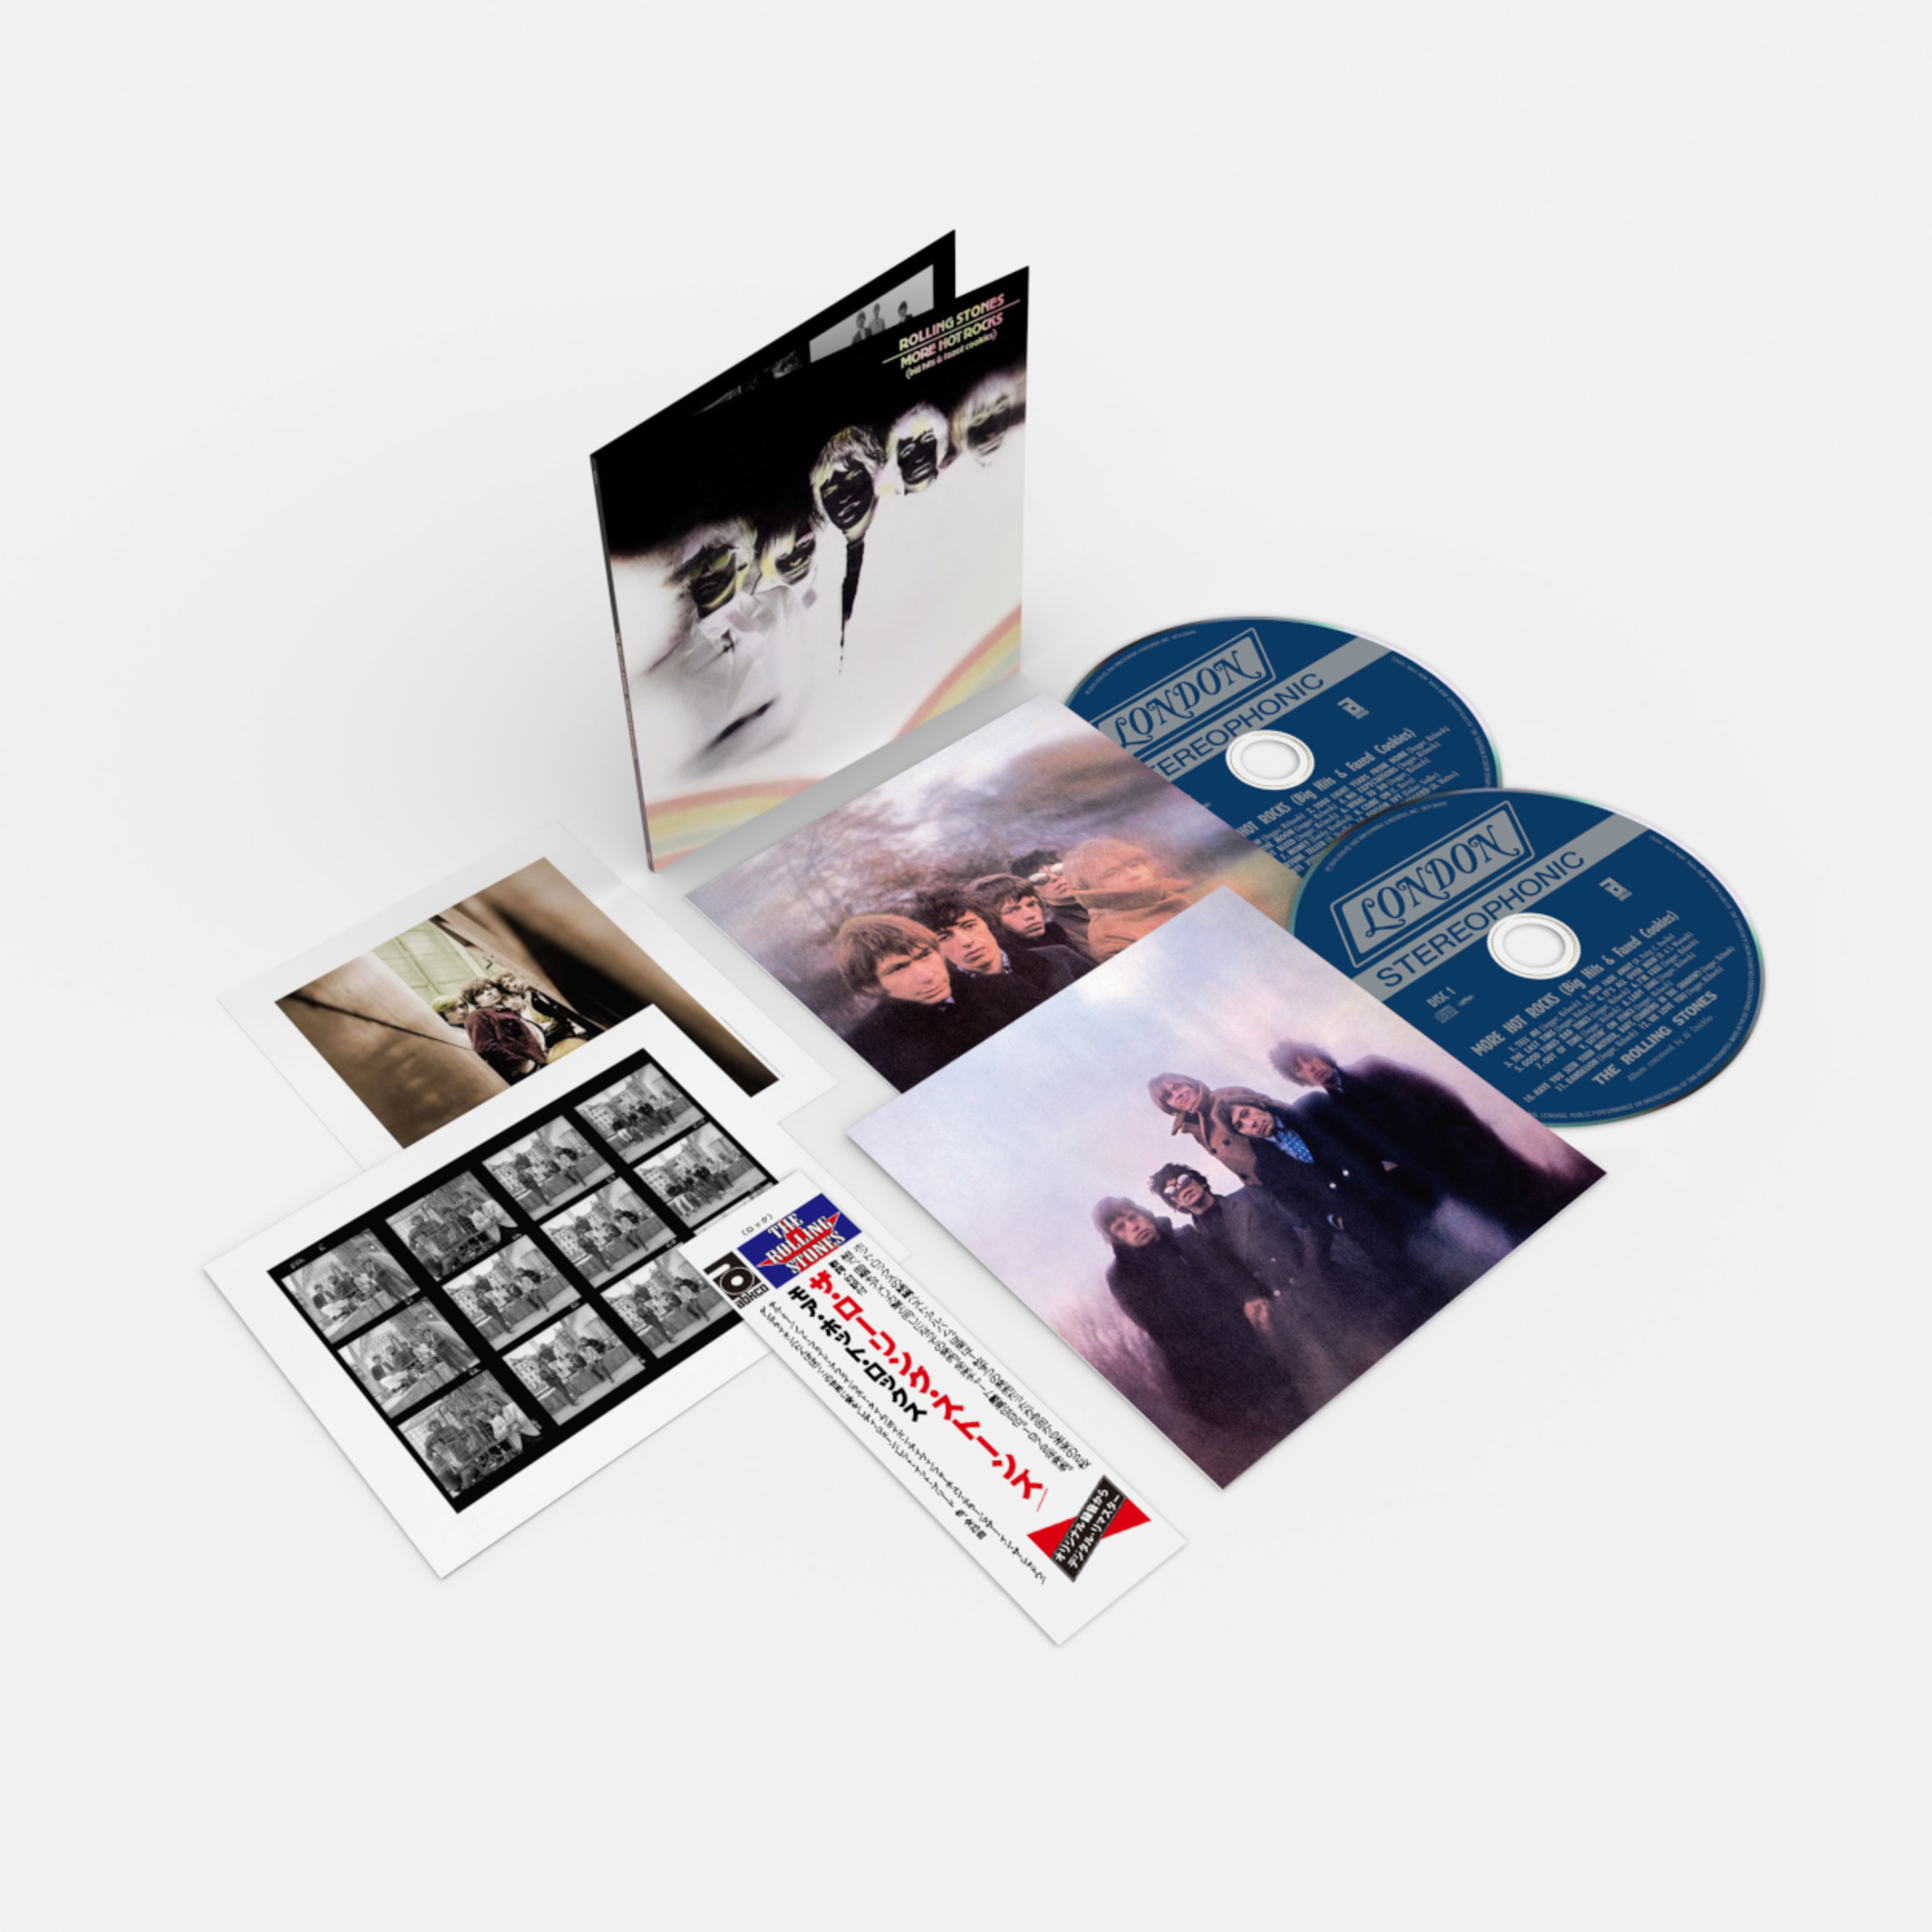 JUL - MY WORLD ALBUM CD CD - 9,99 € D&P Shop